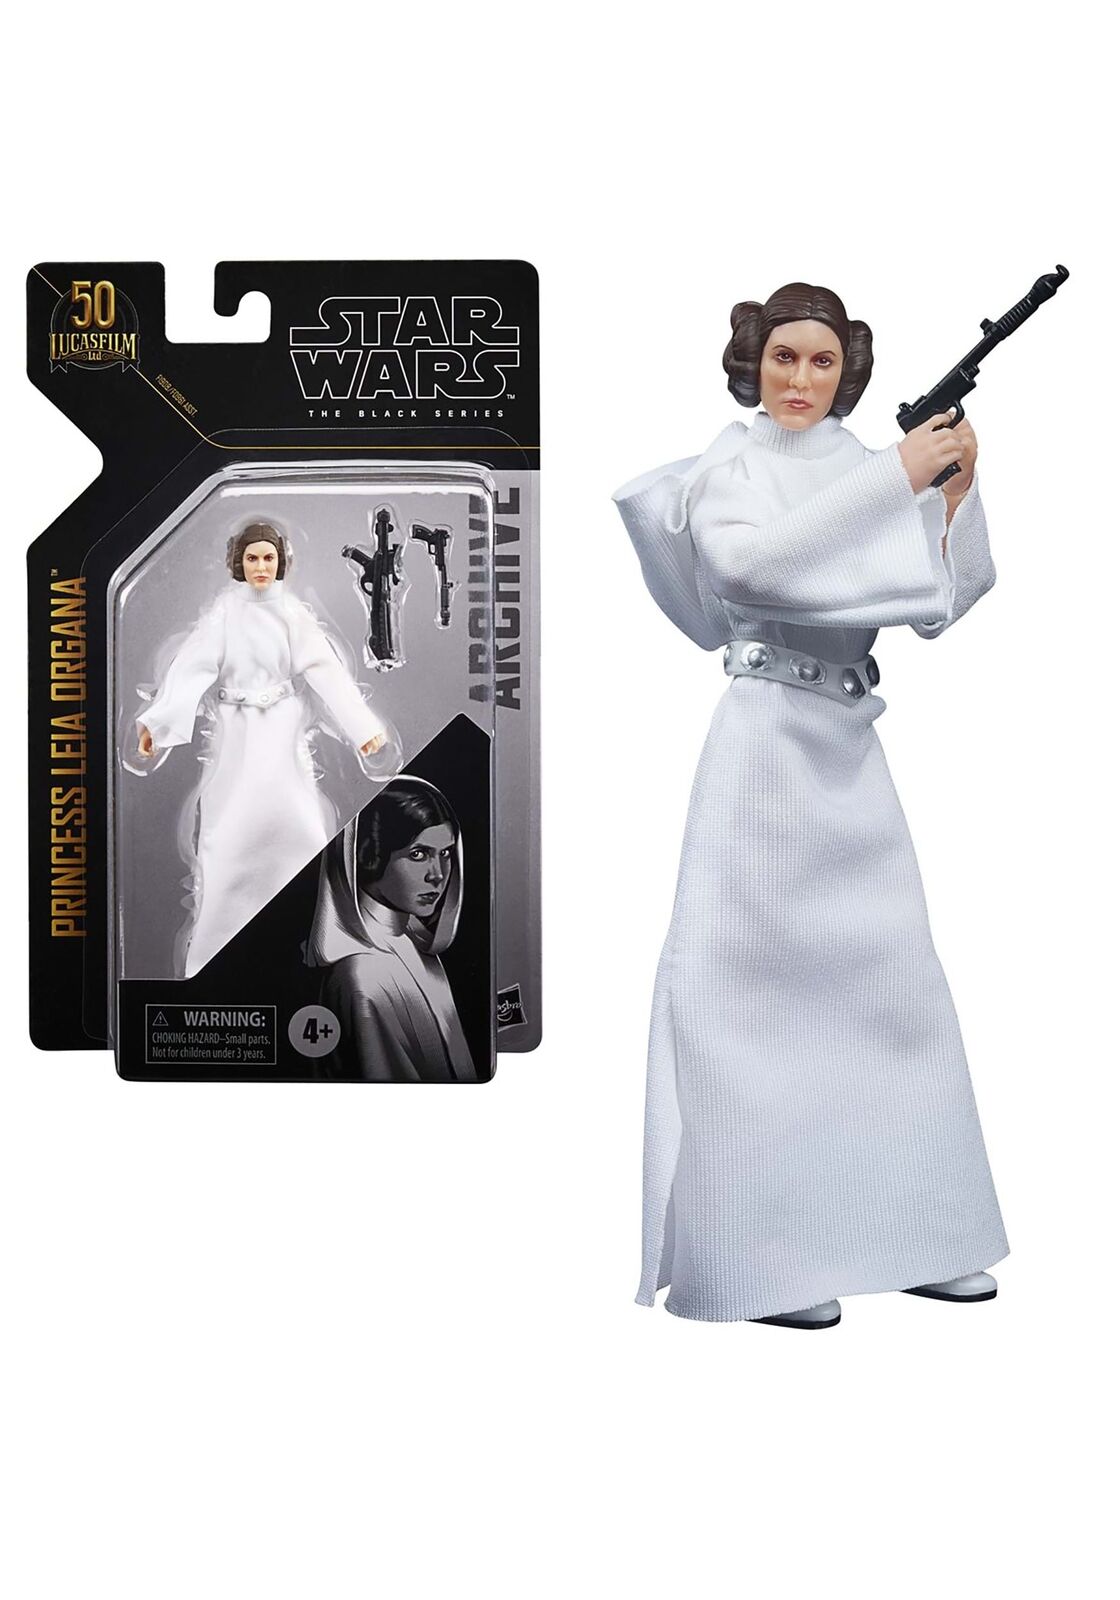 Star Wars: Black Series - Archive Princess Leia Organa 6-Inch Action Figure